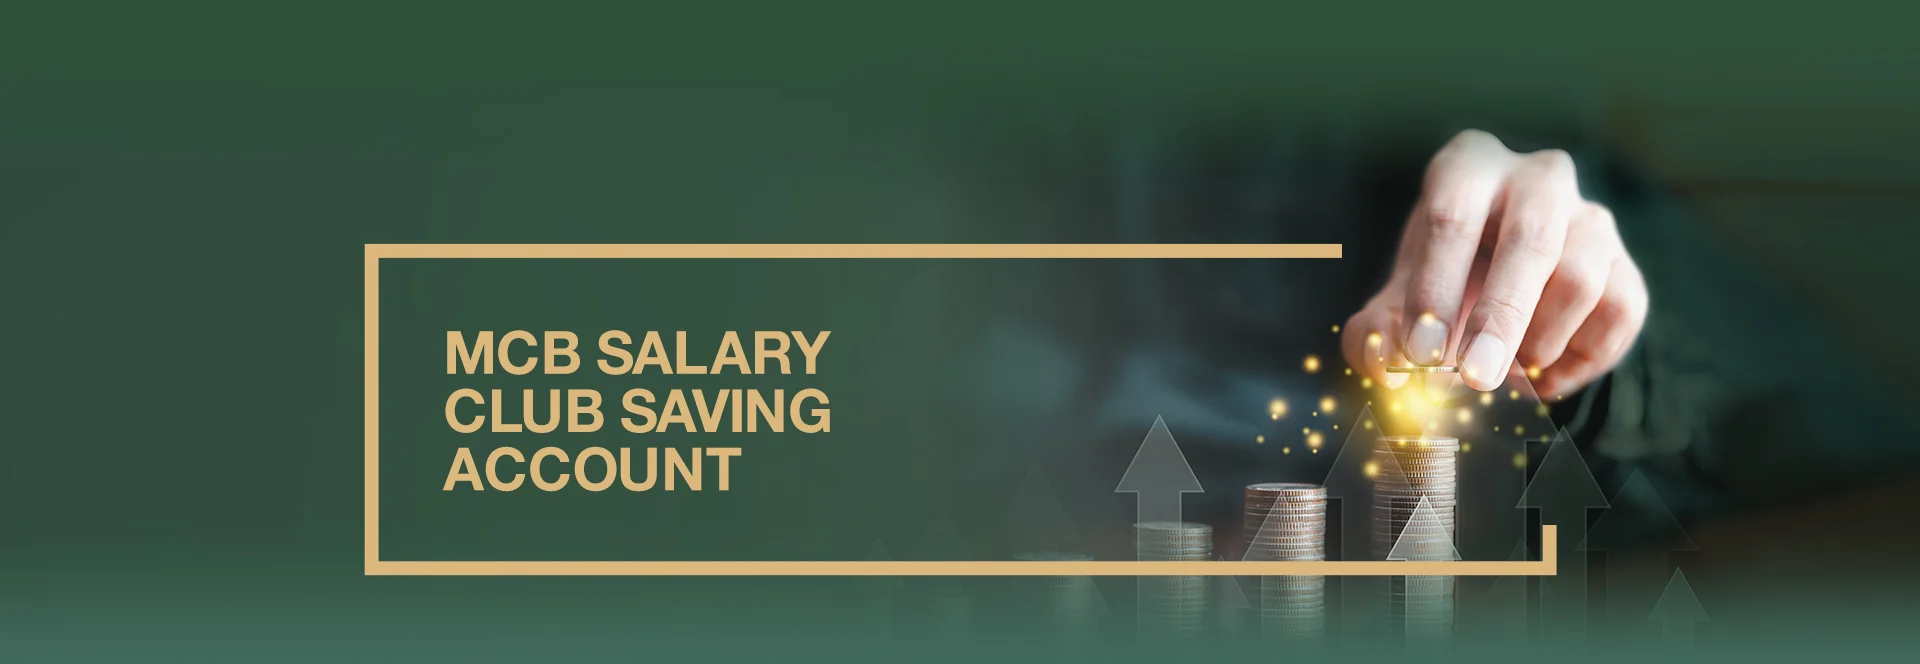 MCB Salary Club Saving Account